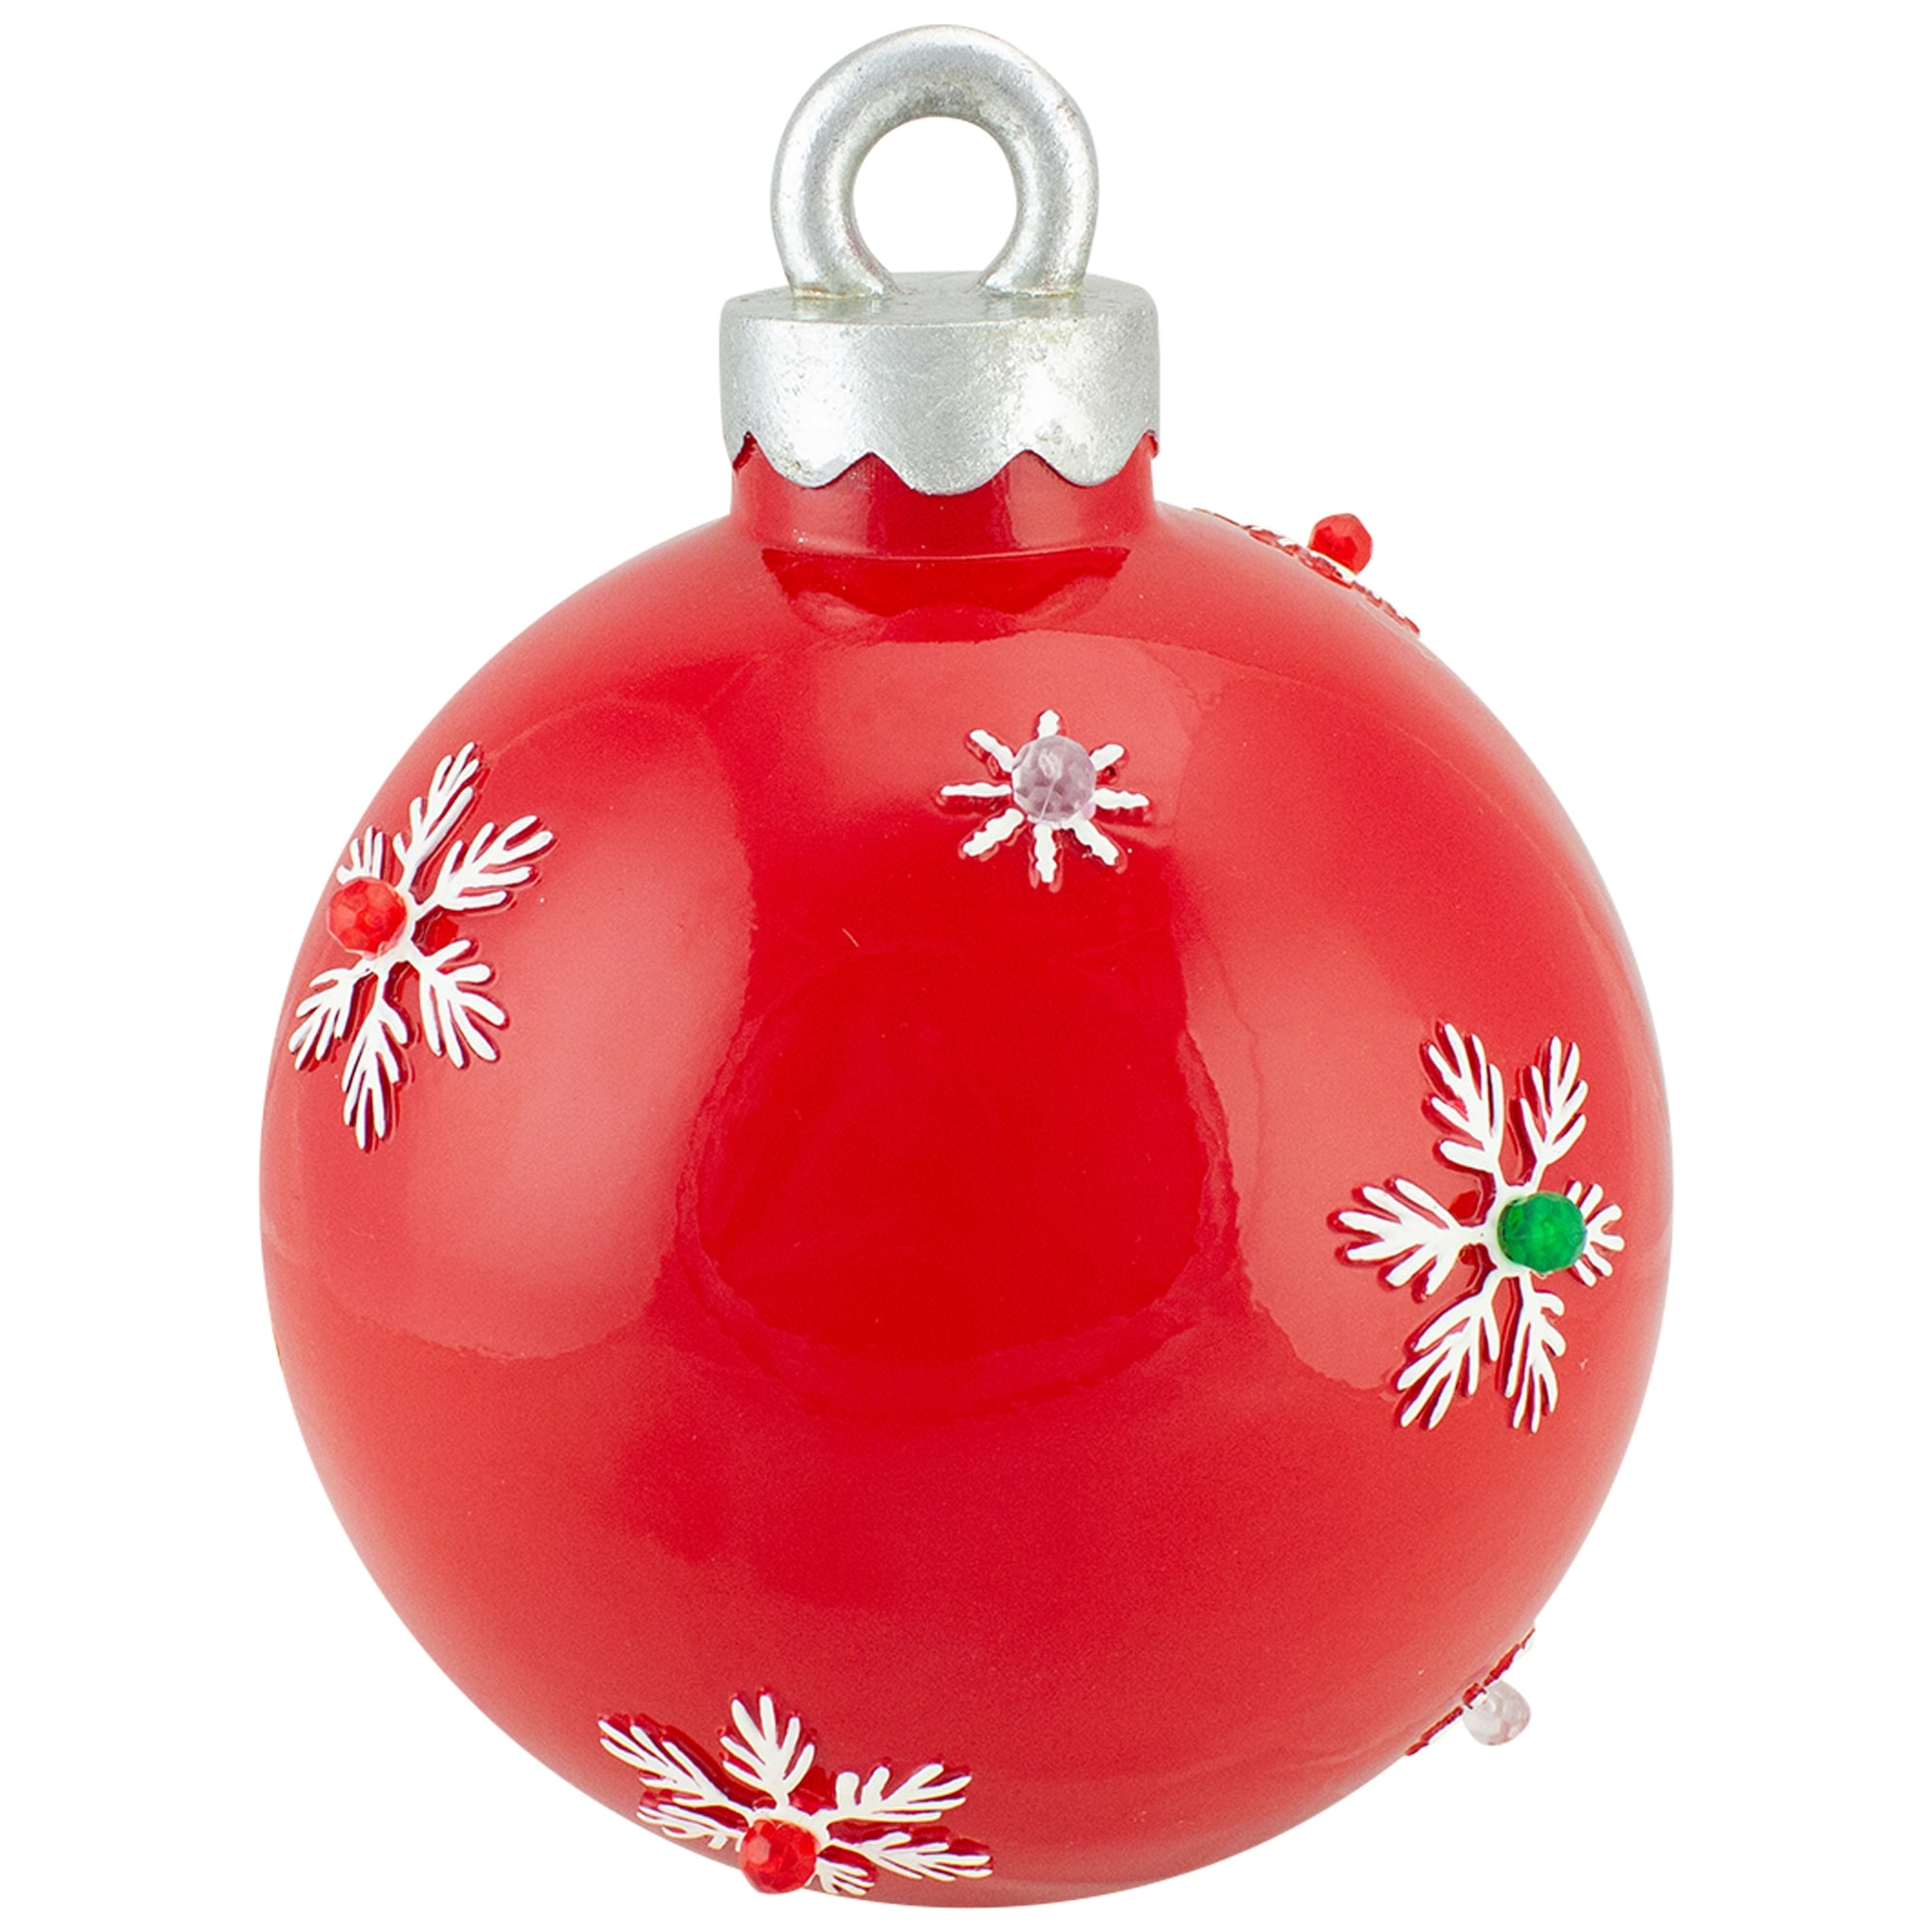 Red and Black Damask Christmas Ball Ornament Idea Ceramica